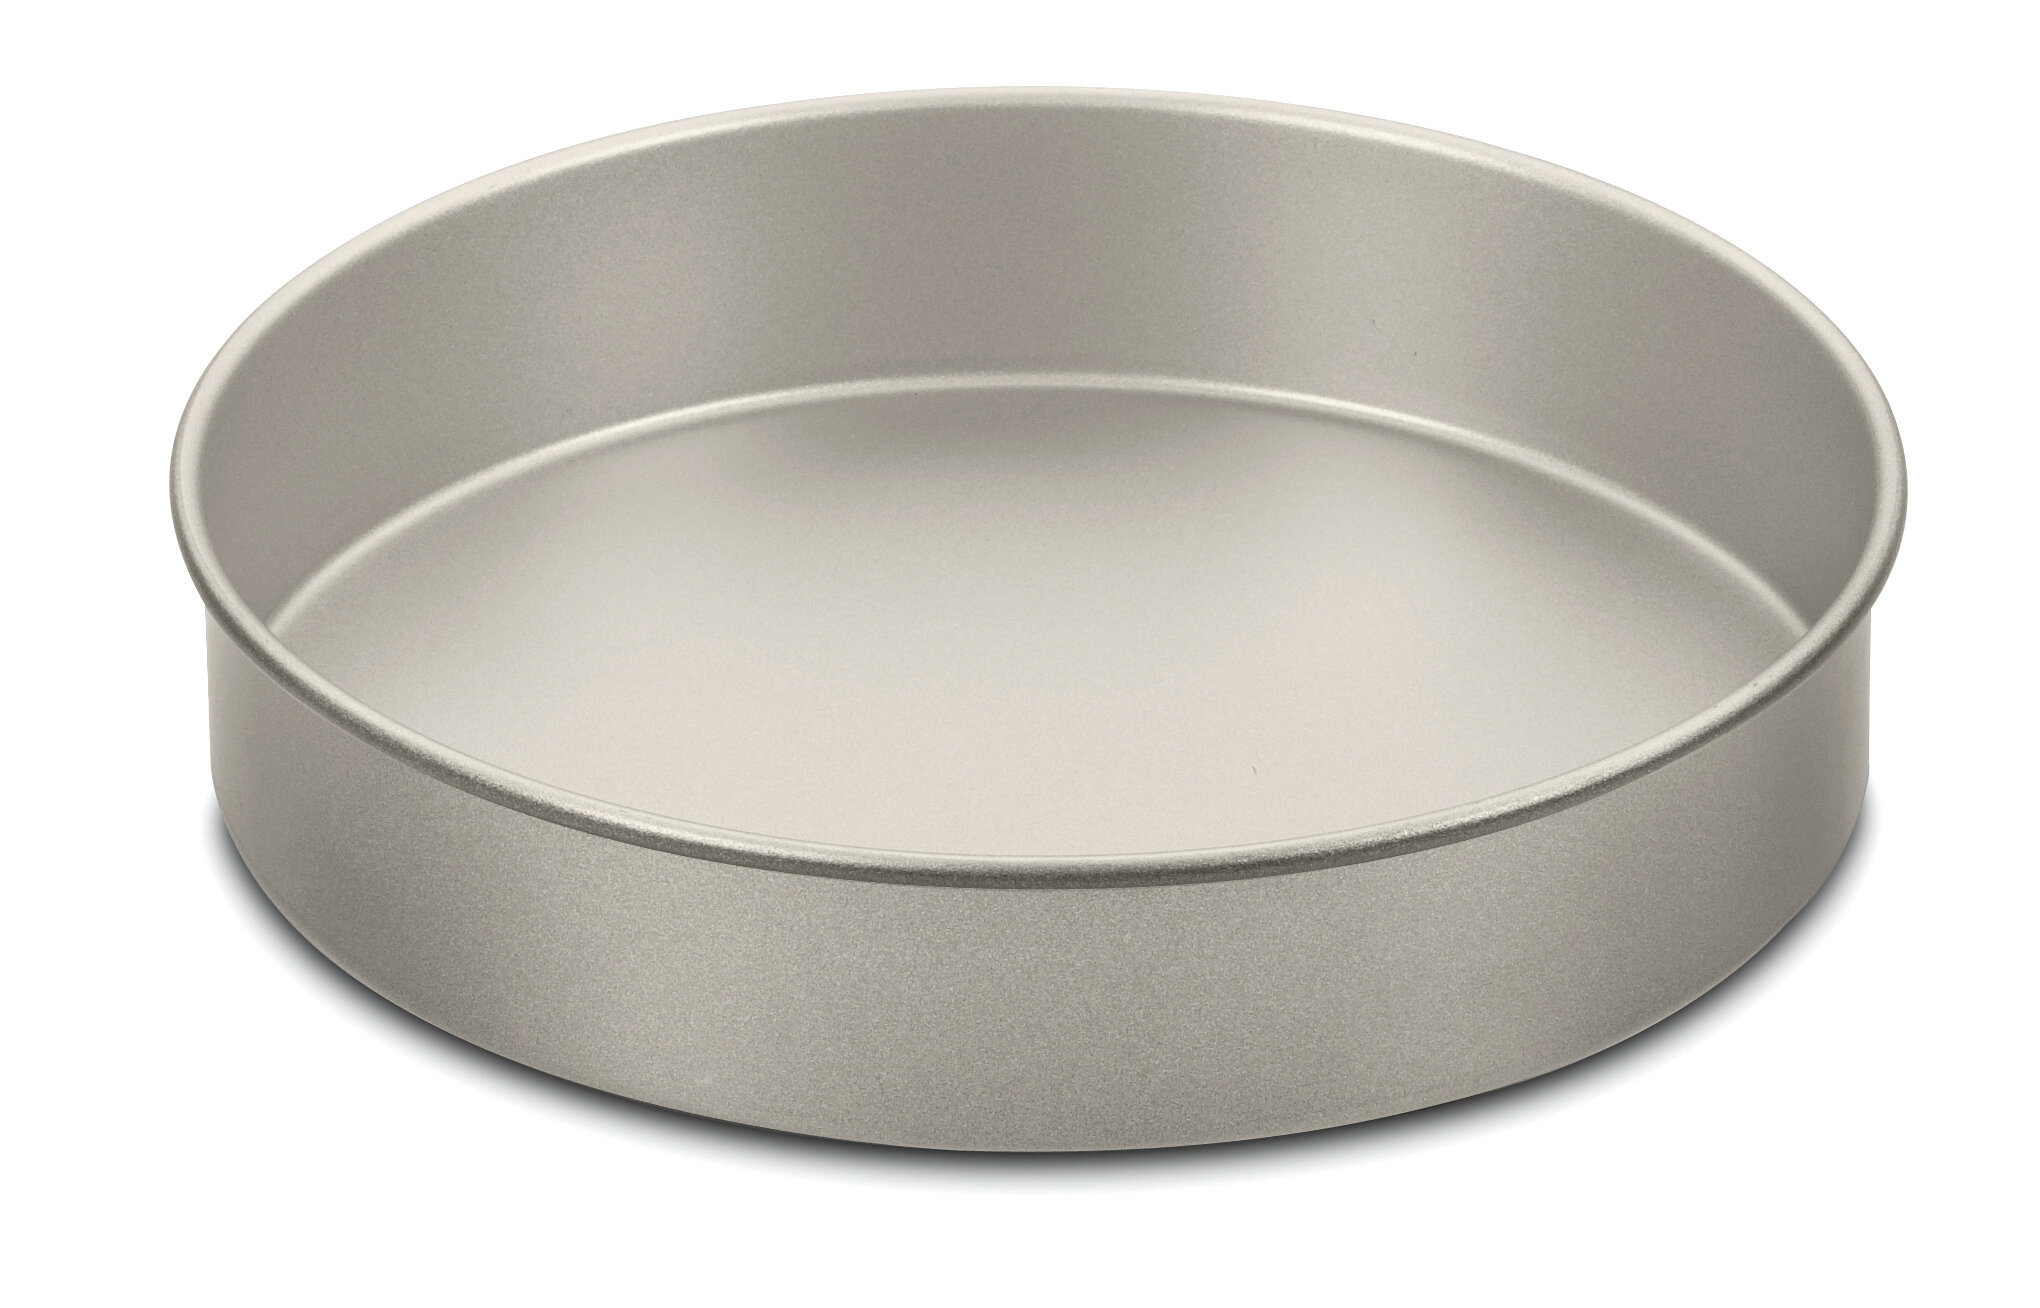 Advance Select Premium Nonstick Oblong Baking Pan, 9 X 13-Inch, Steel,  Silver